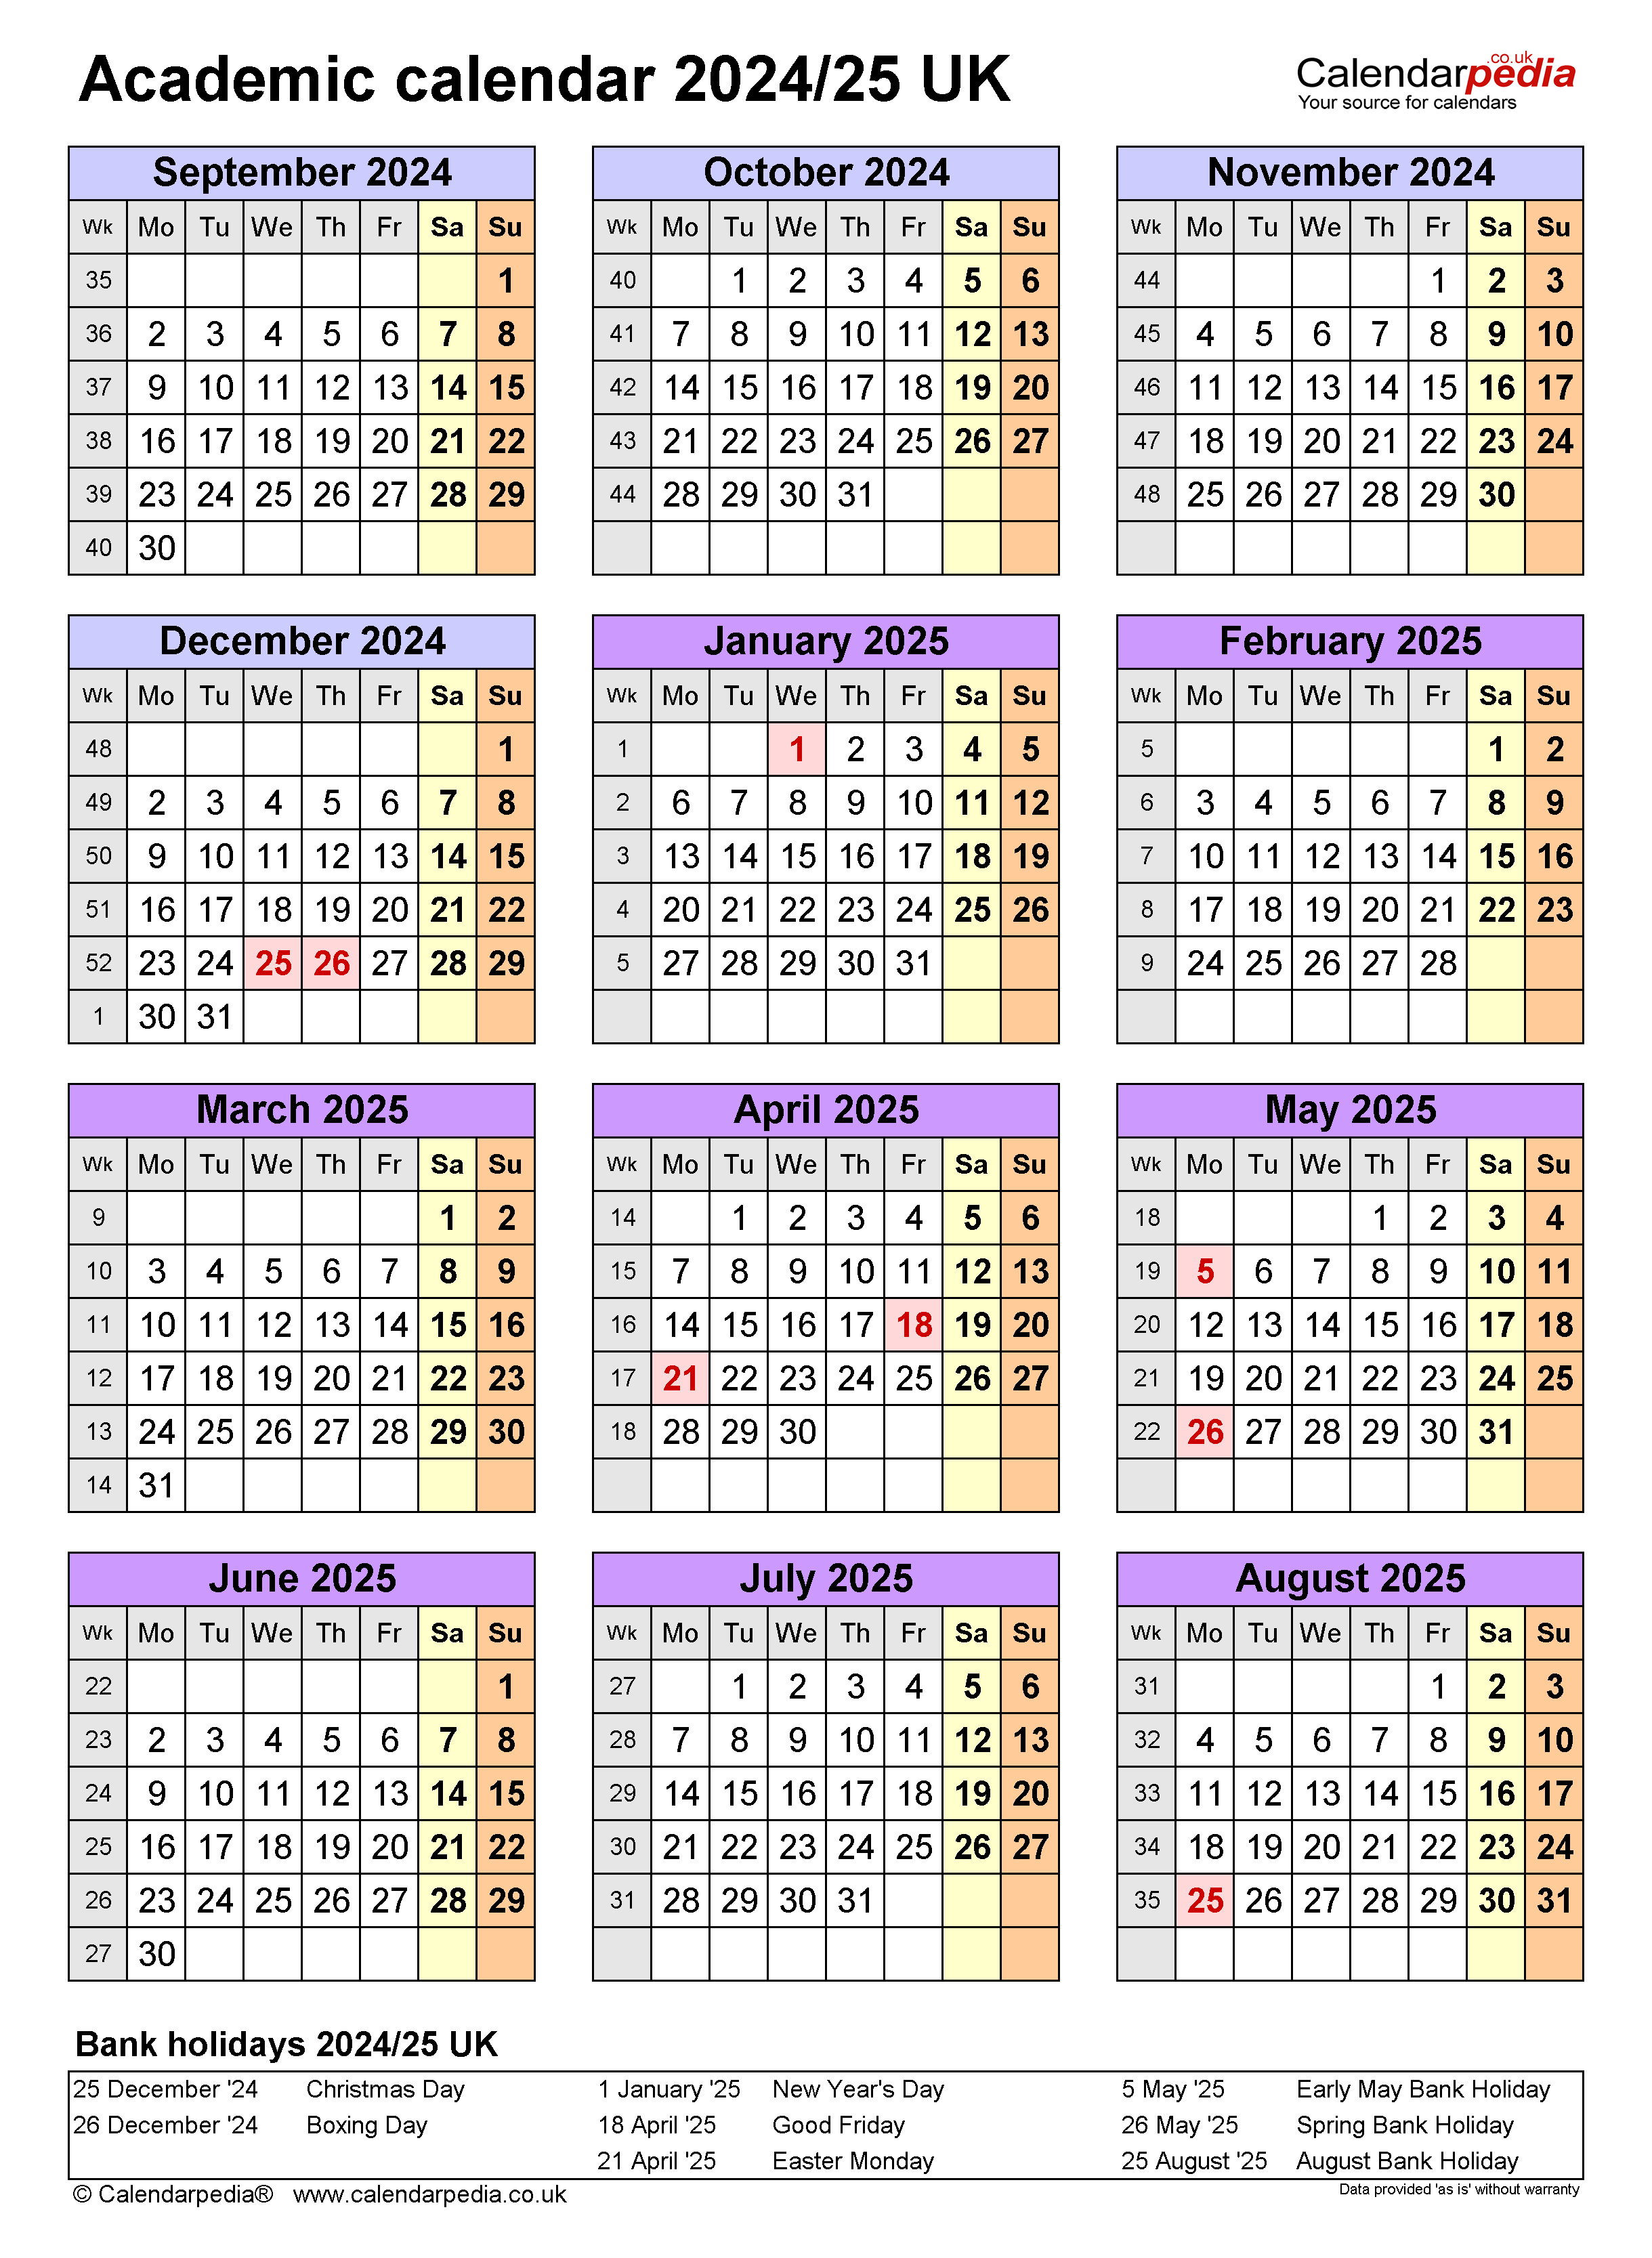 fgcu-academic-calendar-fall-2023-calendar-2023